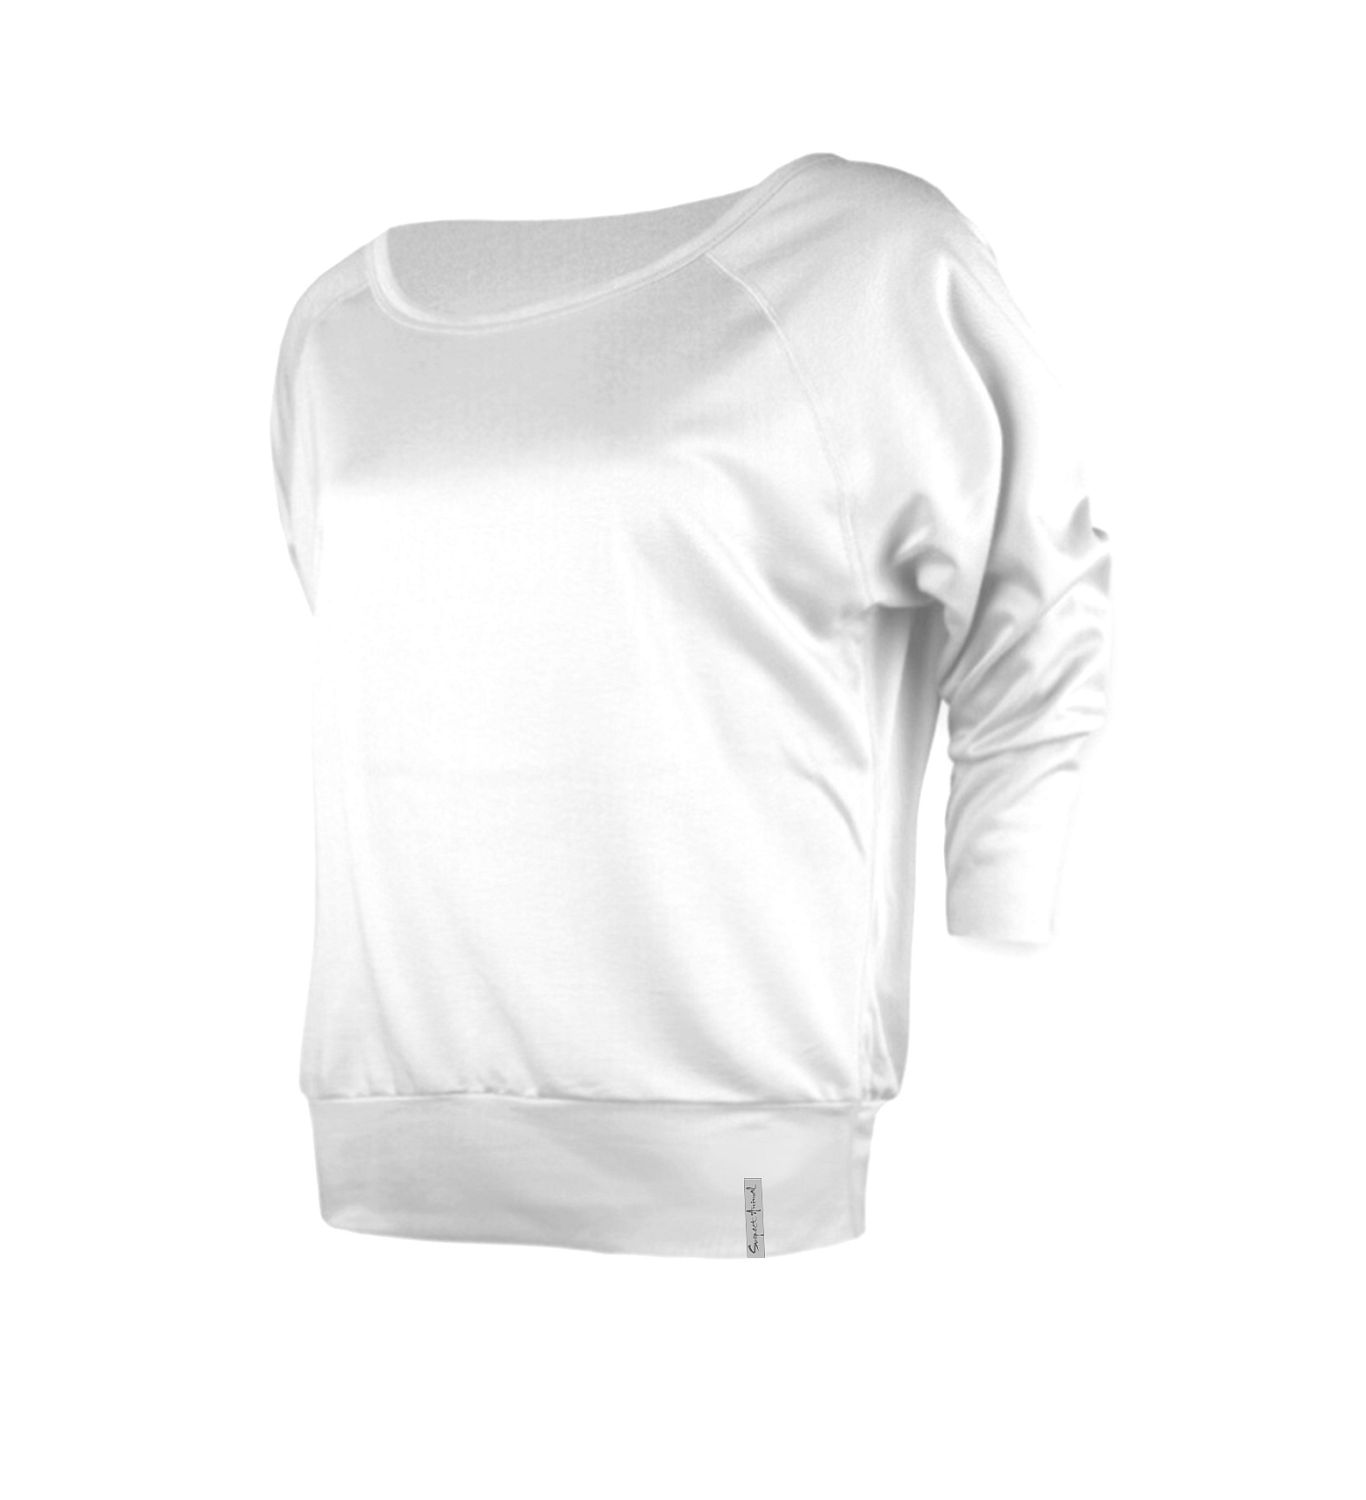 Funkční sportovní volné triko raglán 3/4 rukáv Yoga bílá Supplex